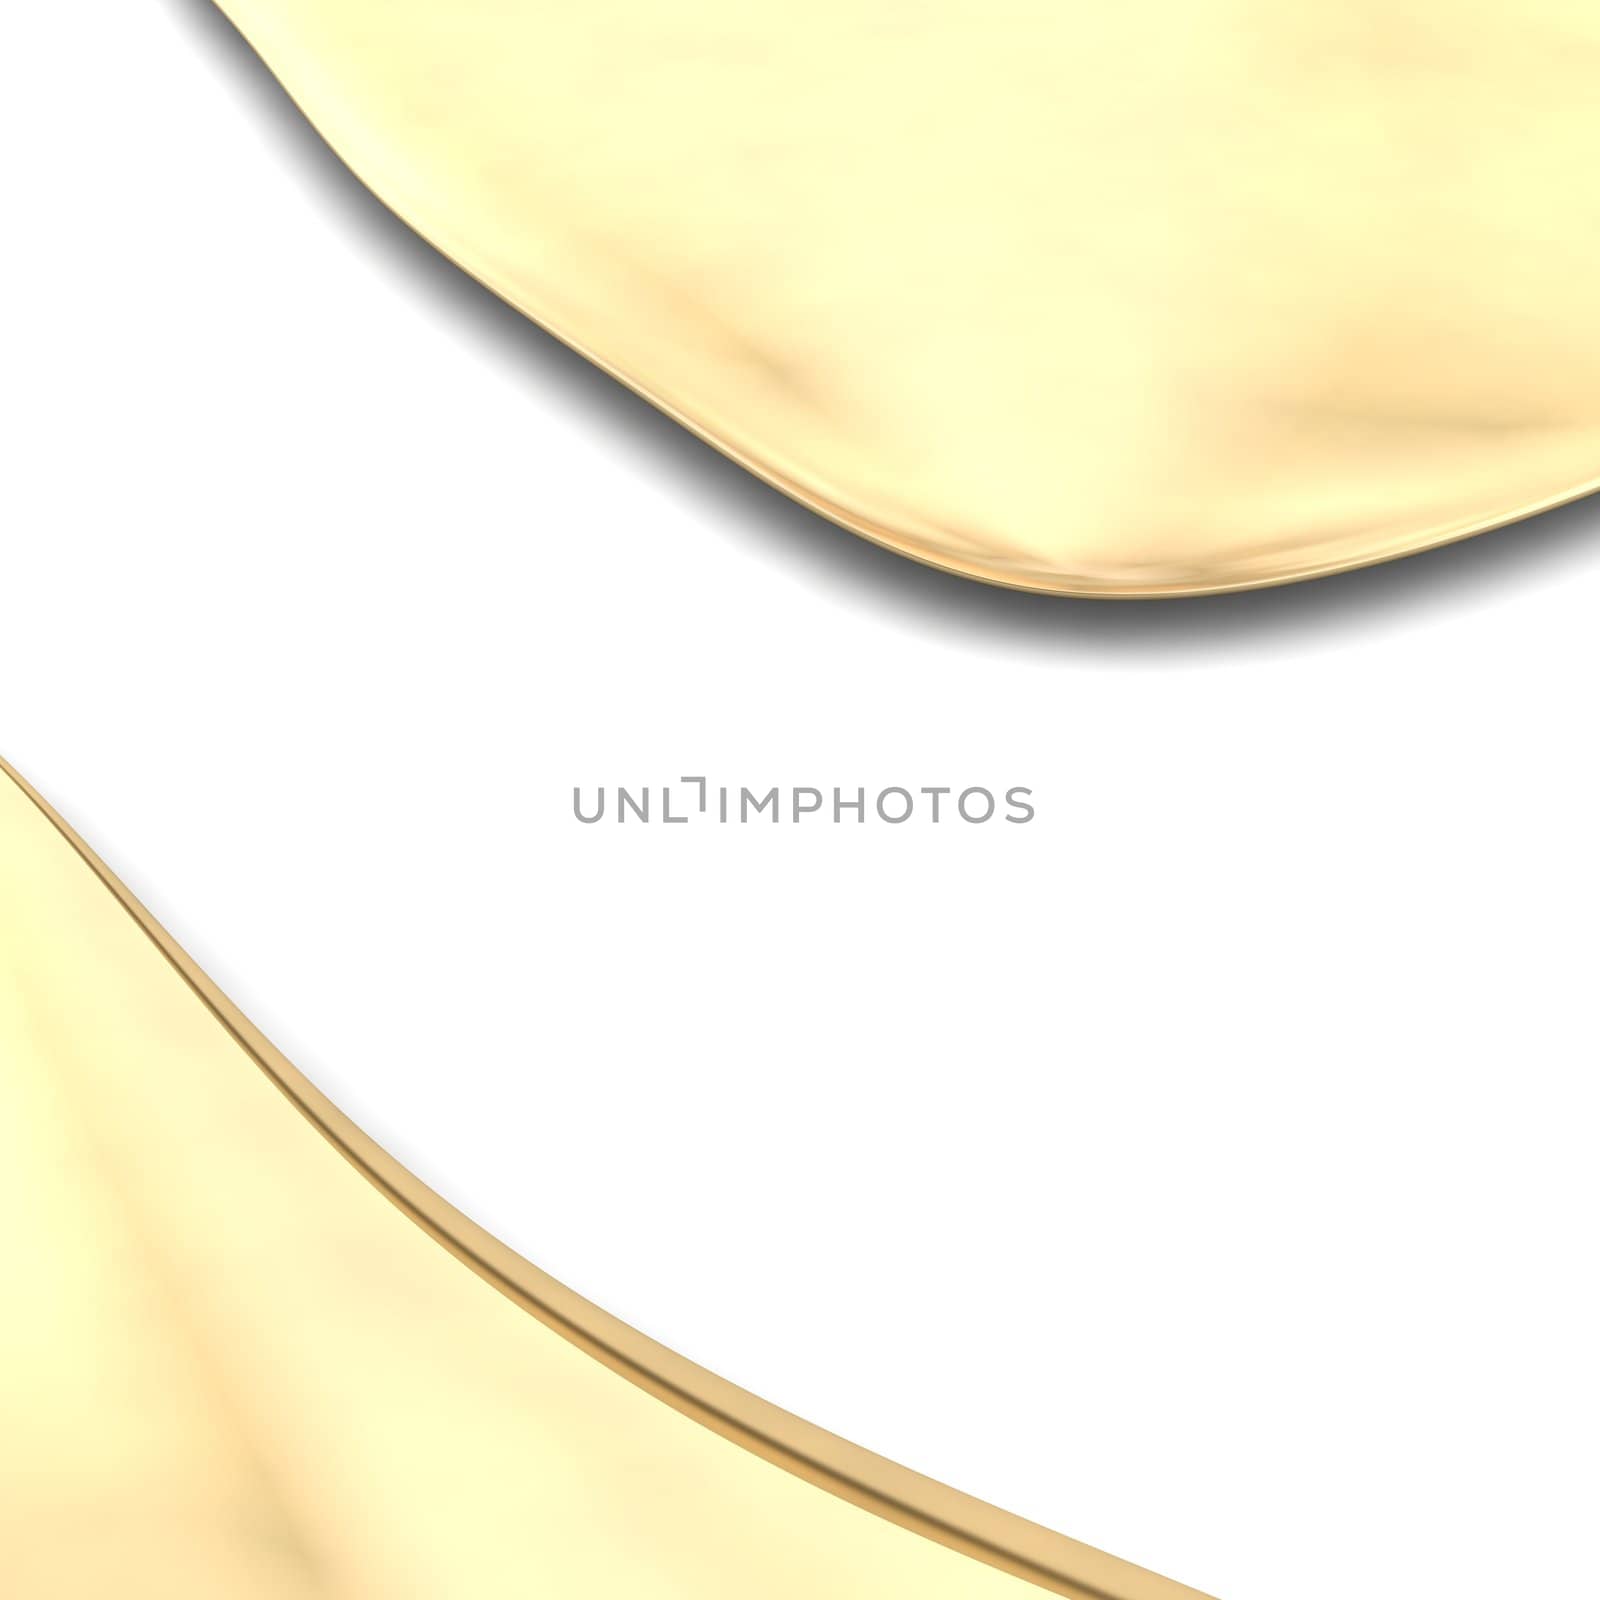 Abstract golden background. 3d rendered illustration.